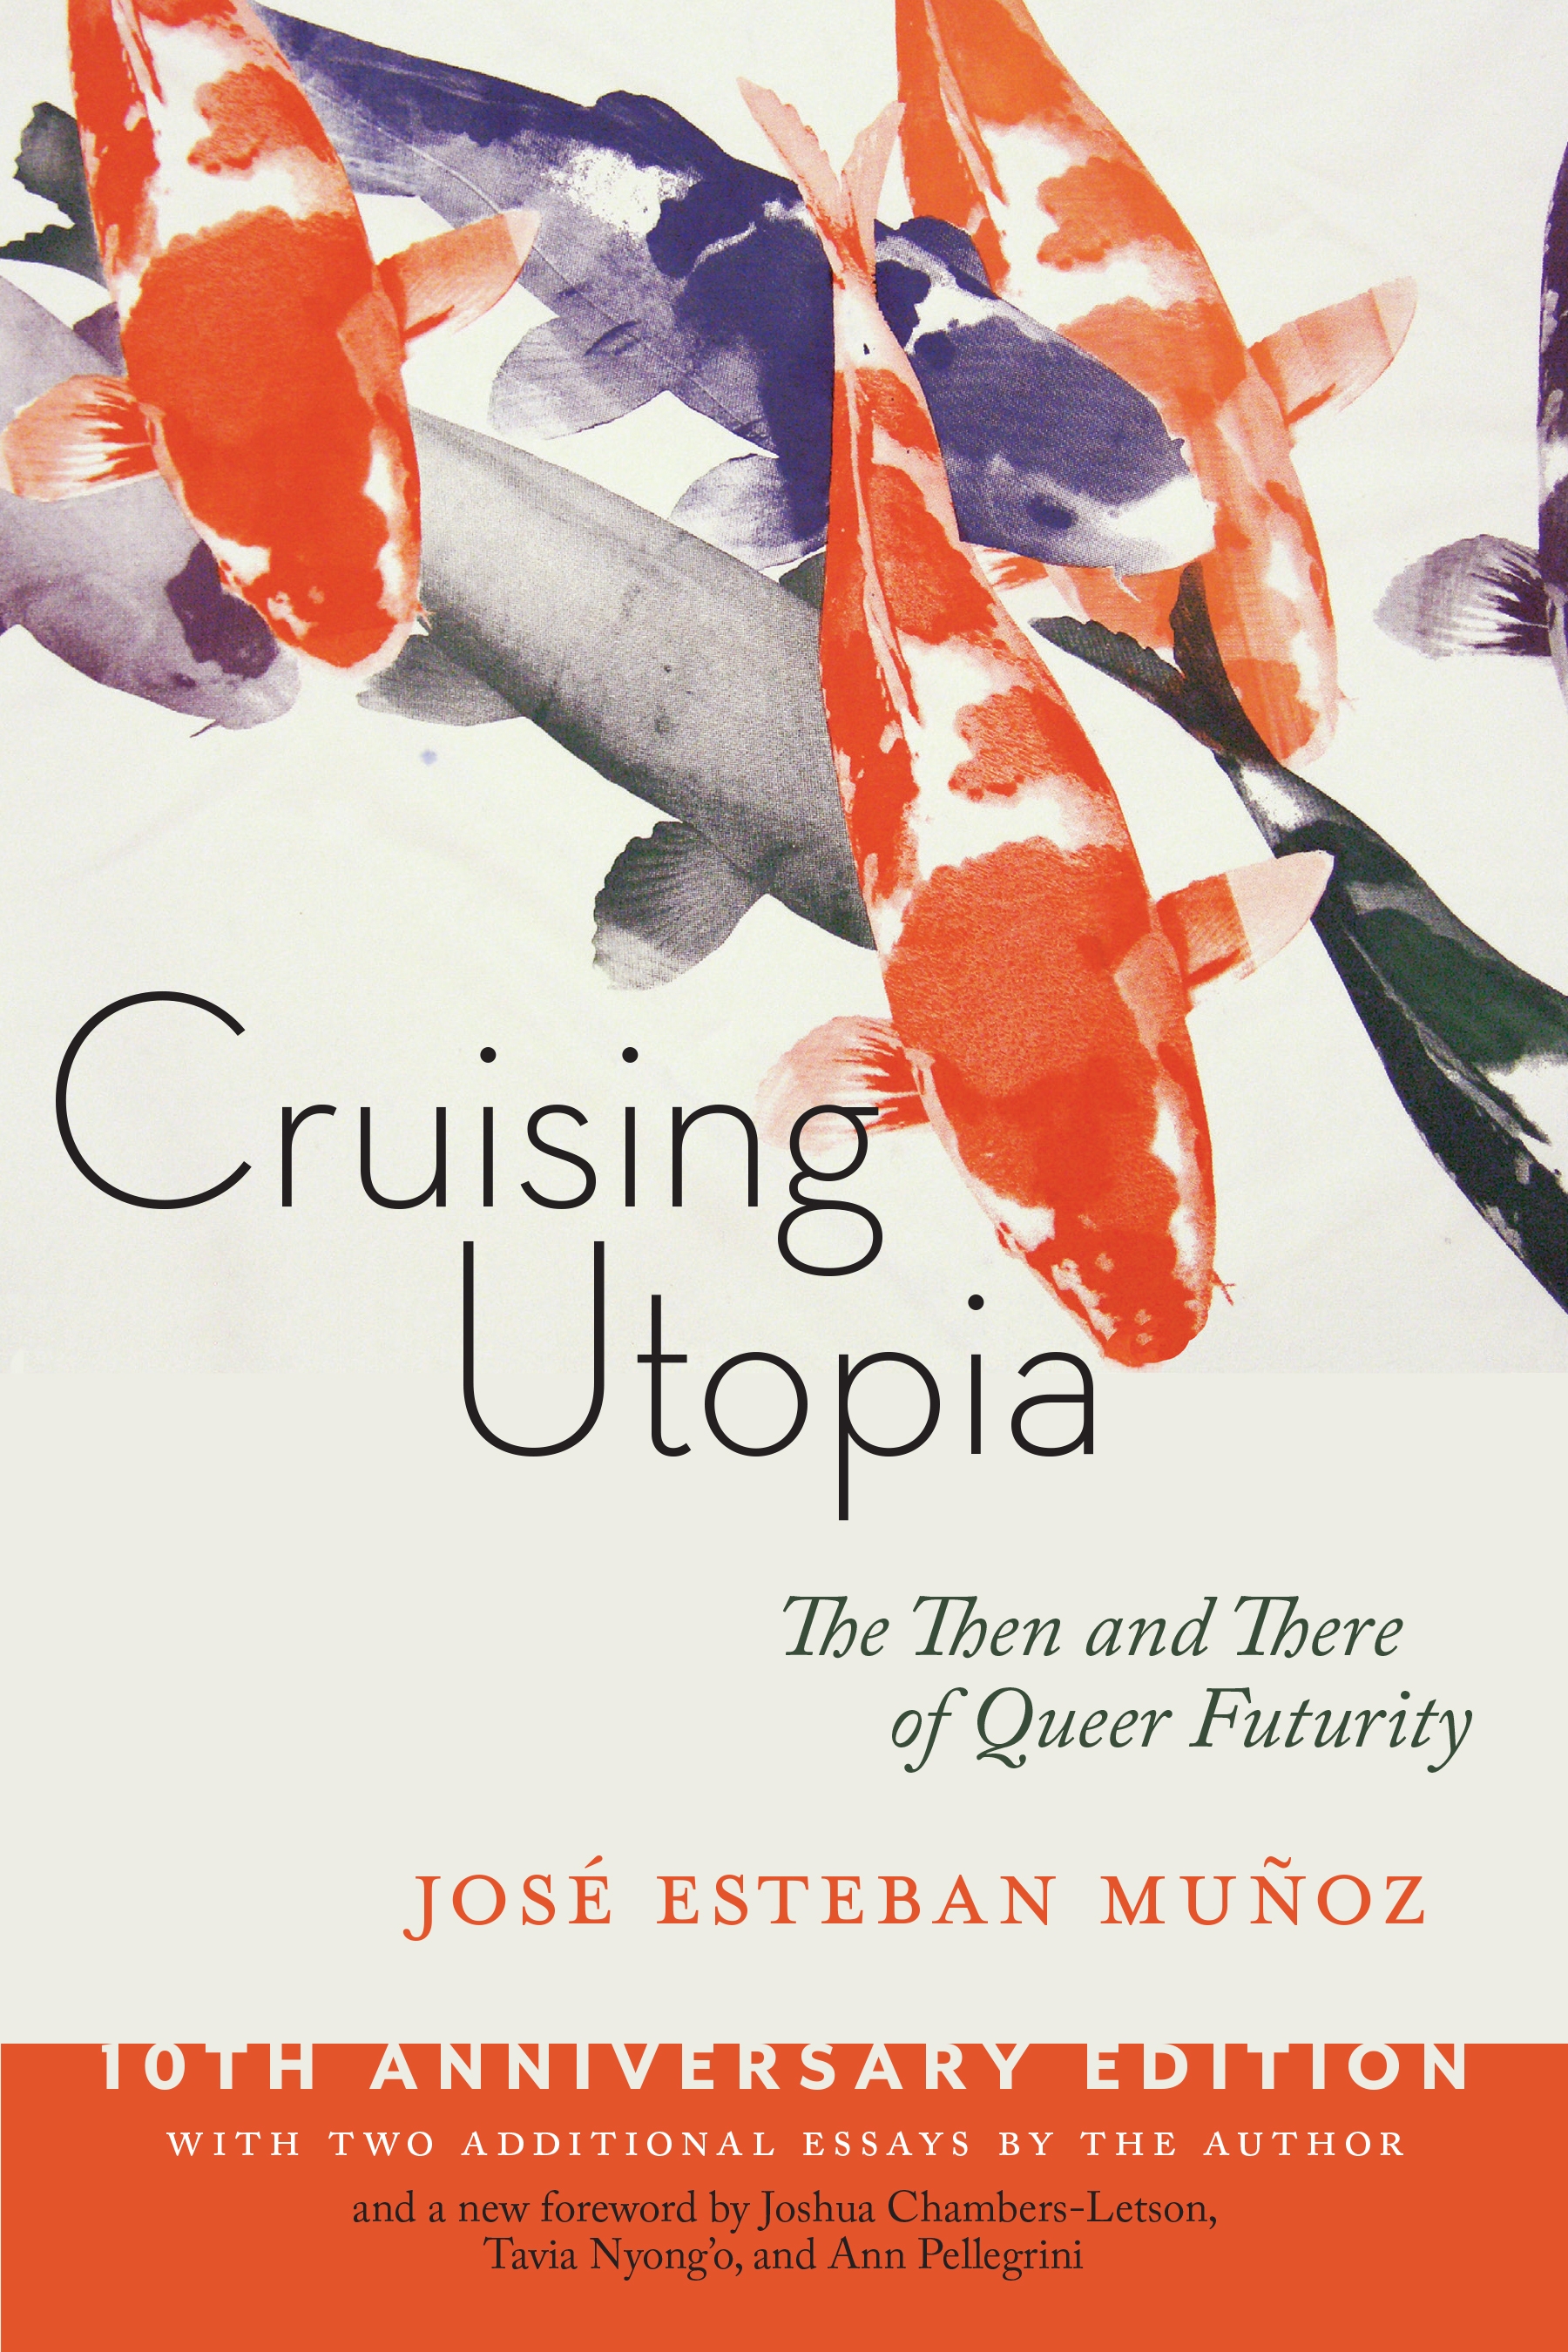 The Fourth Annual José Esteban Muñoz Memorial Lecture event flyer